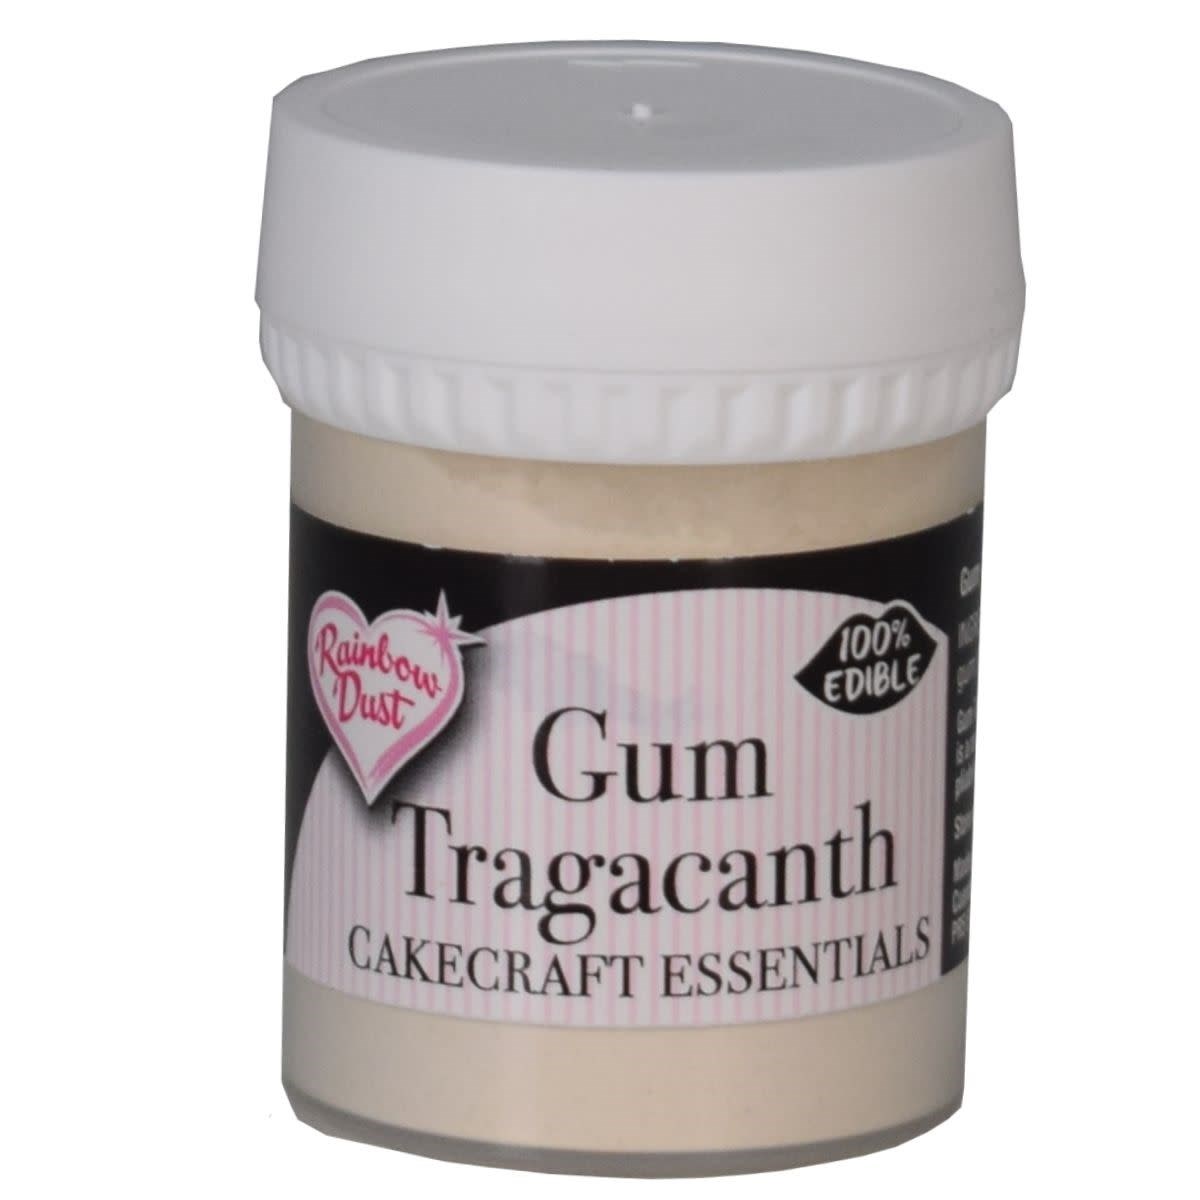 Gum Tragacanth - Ingredients